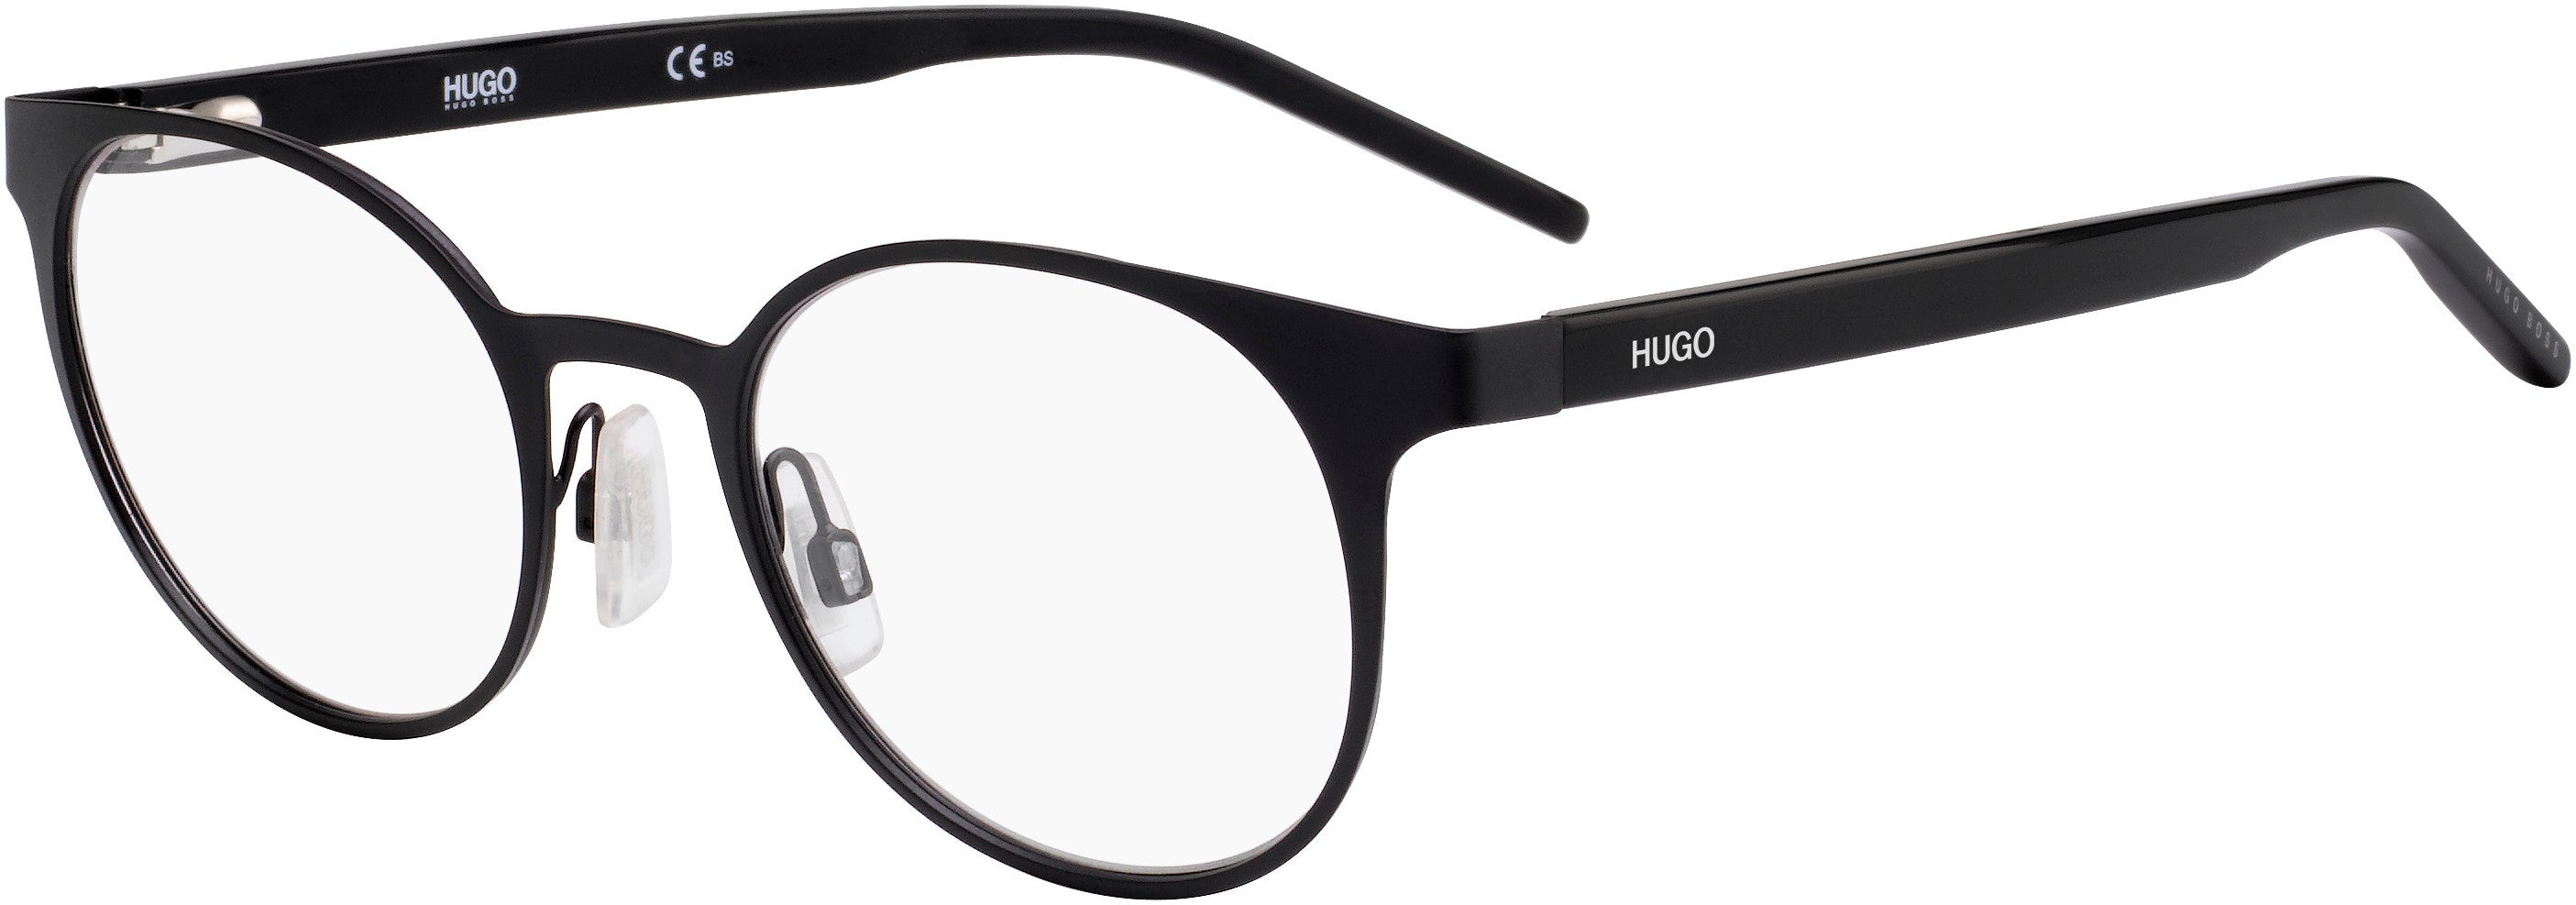 Hugo (hug) Hugo 1042 Oval Modified Eyeglasses 0003-0003  Matte Black (00 Demo Lens)